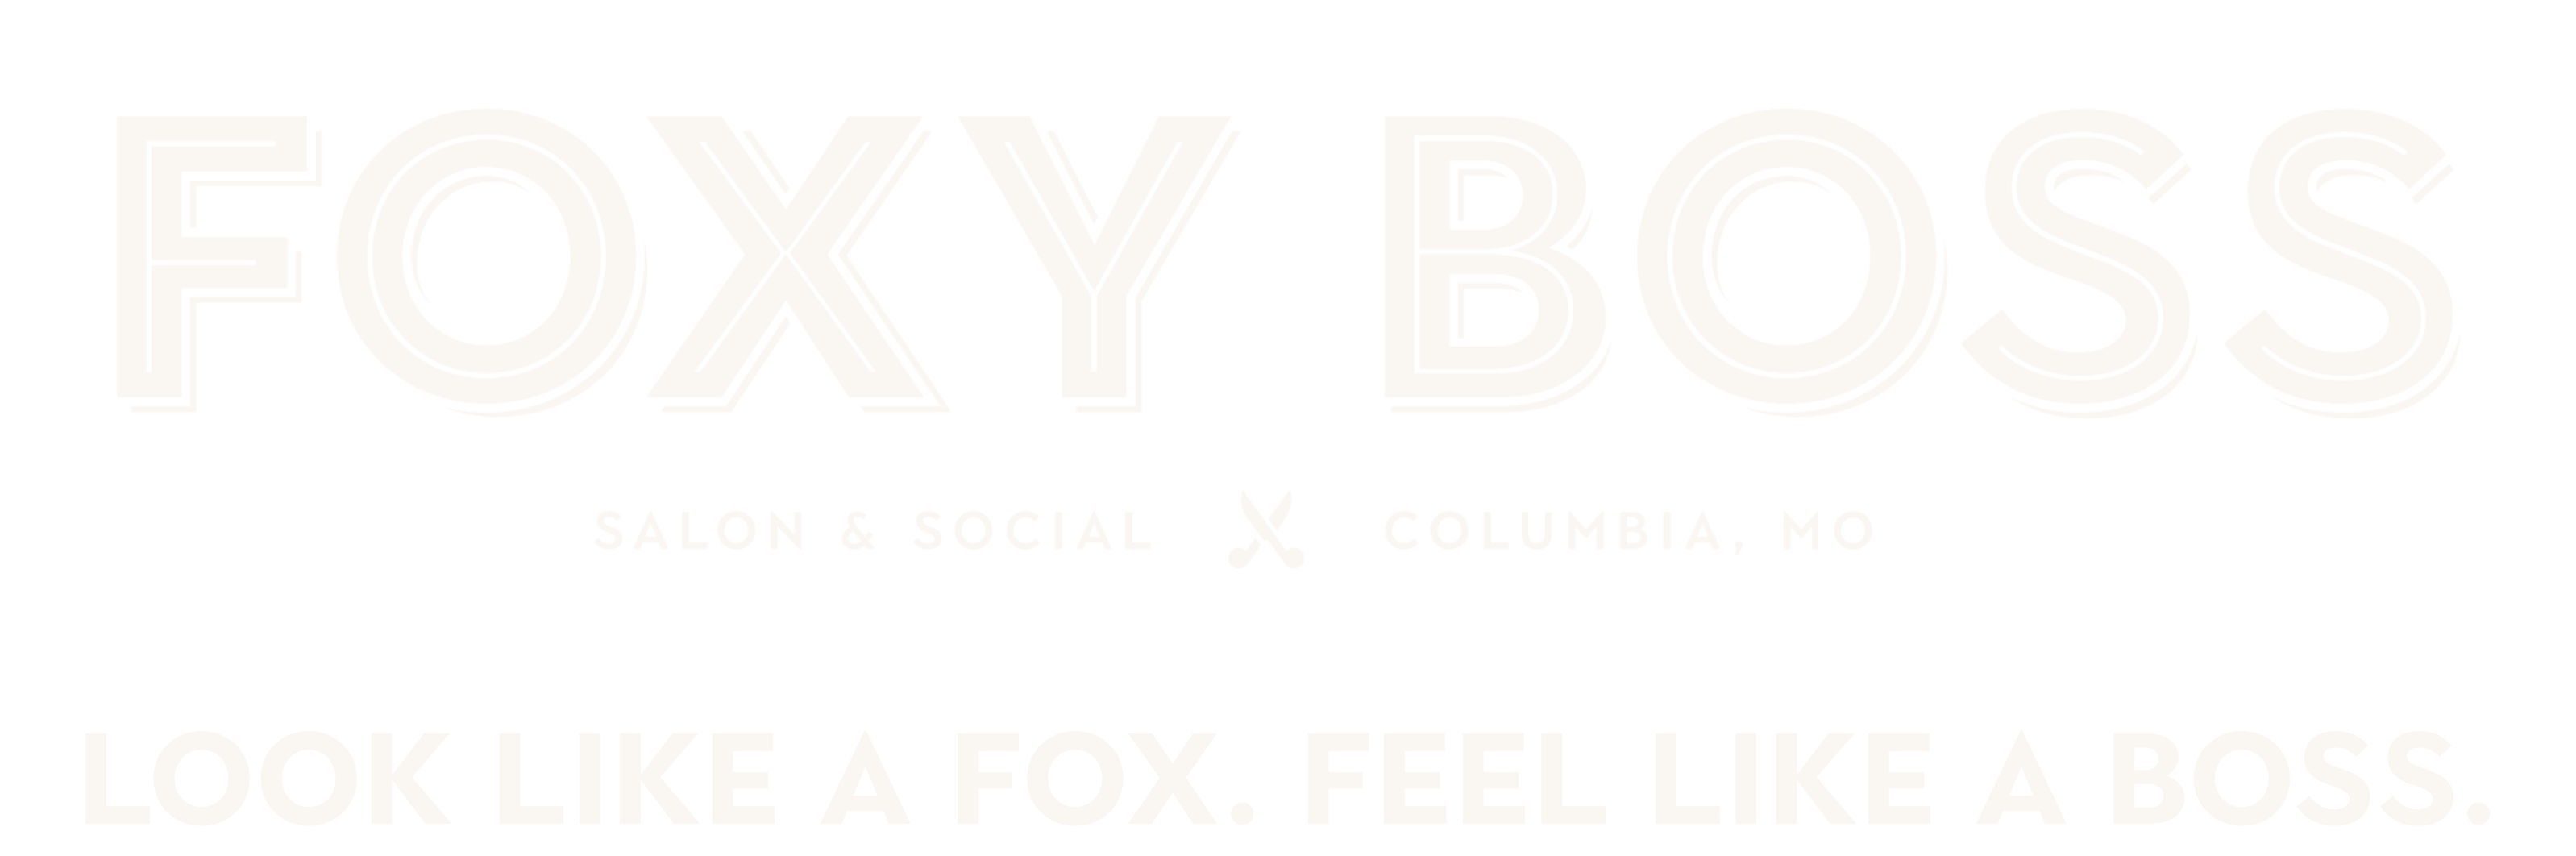 Look like a Fox, Feel Like a Boss text graphic | Foxy Boss